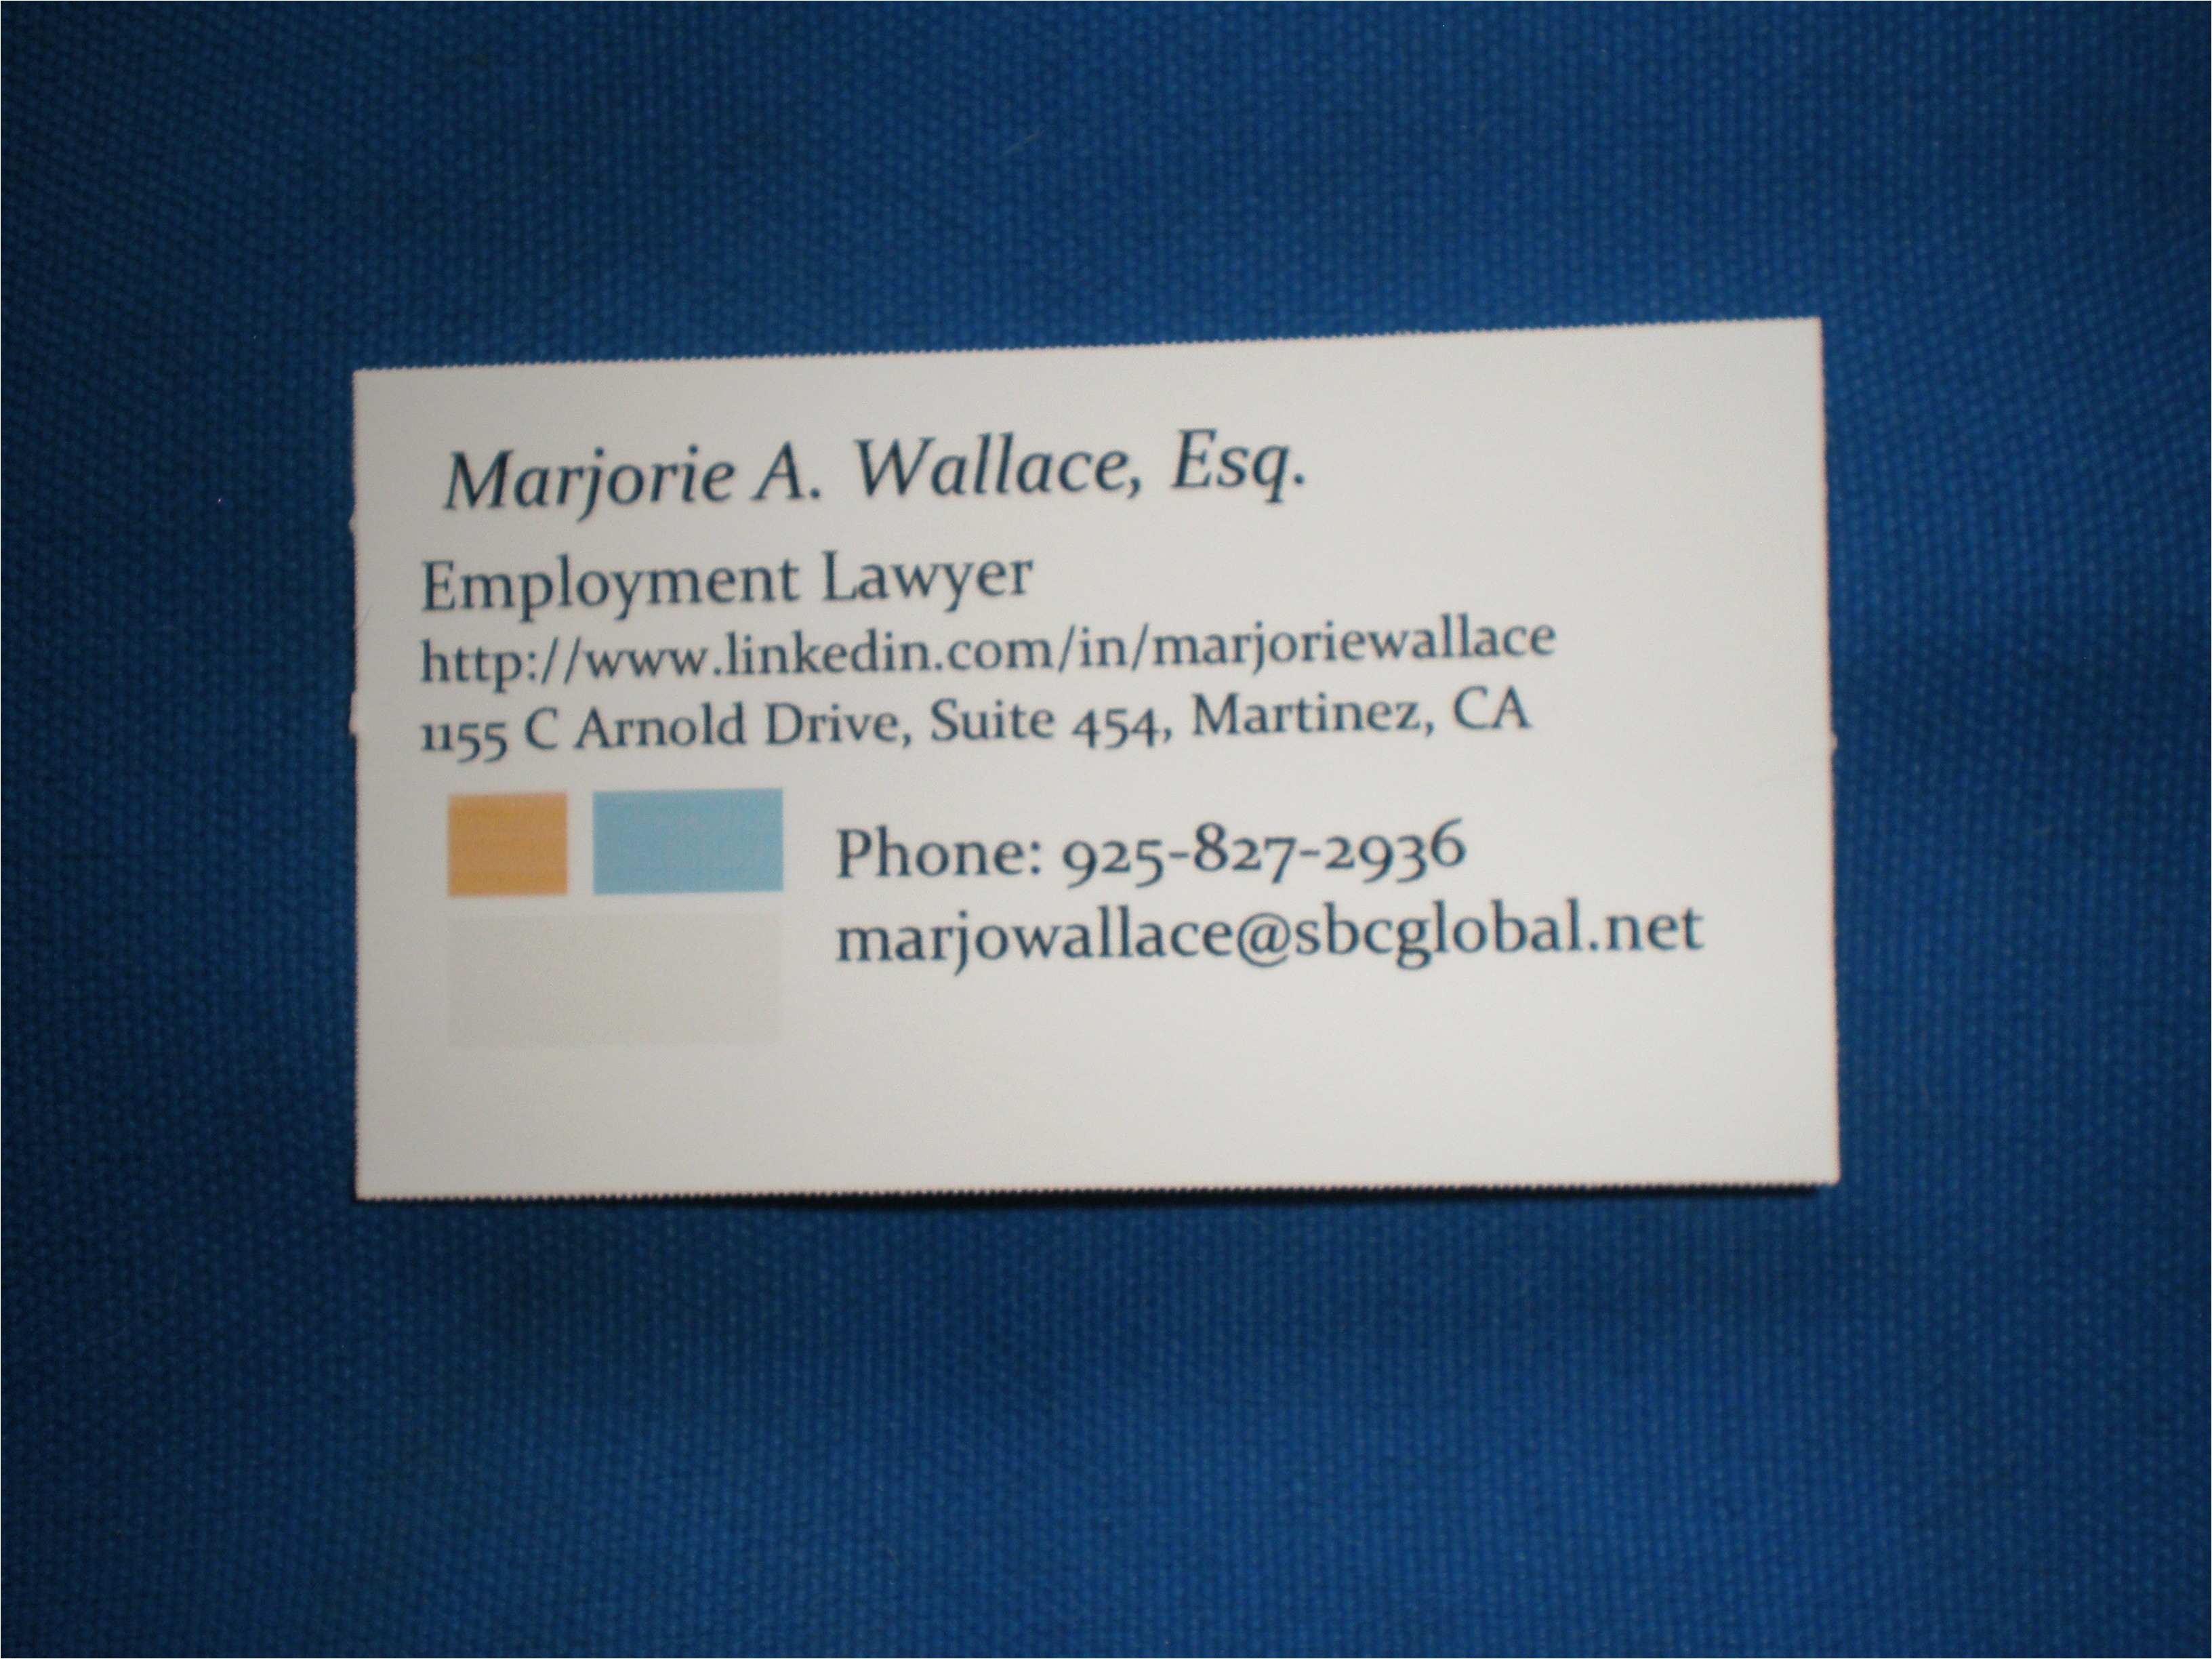 staples heavyweight business cards template fresh delighted staples business card template contemporary business